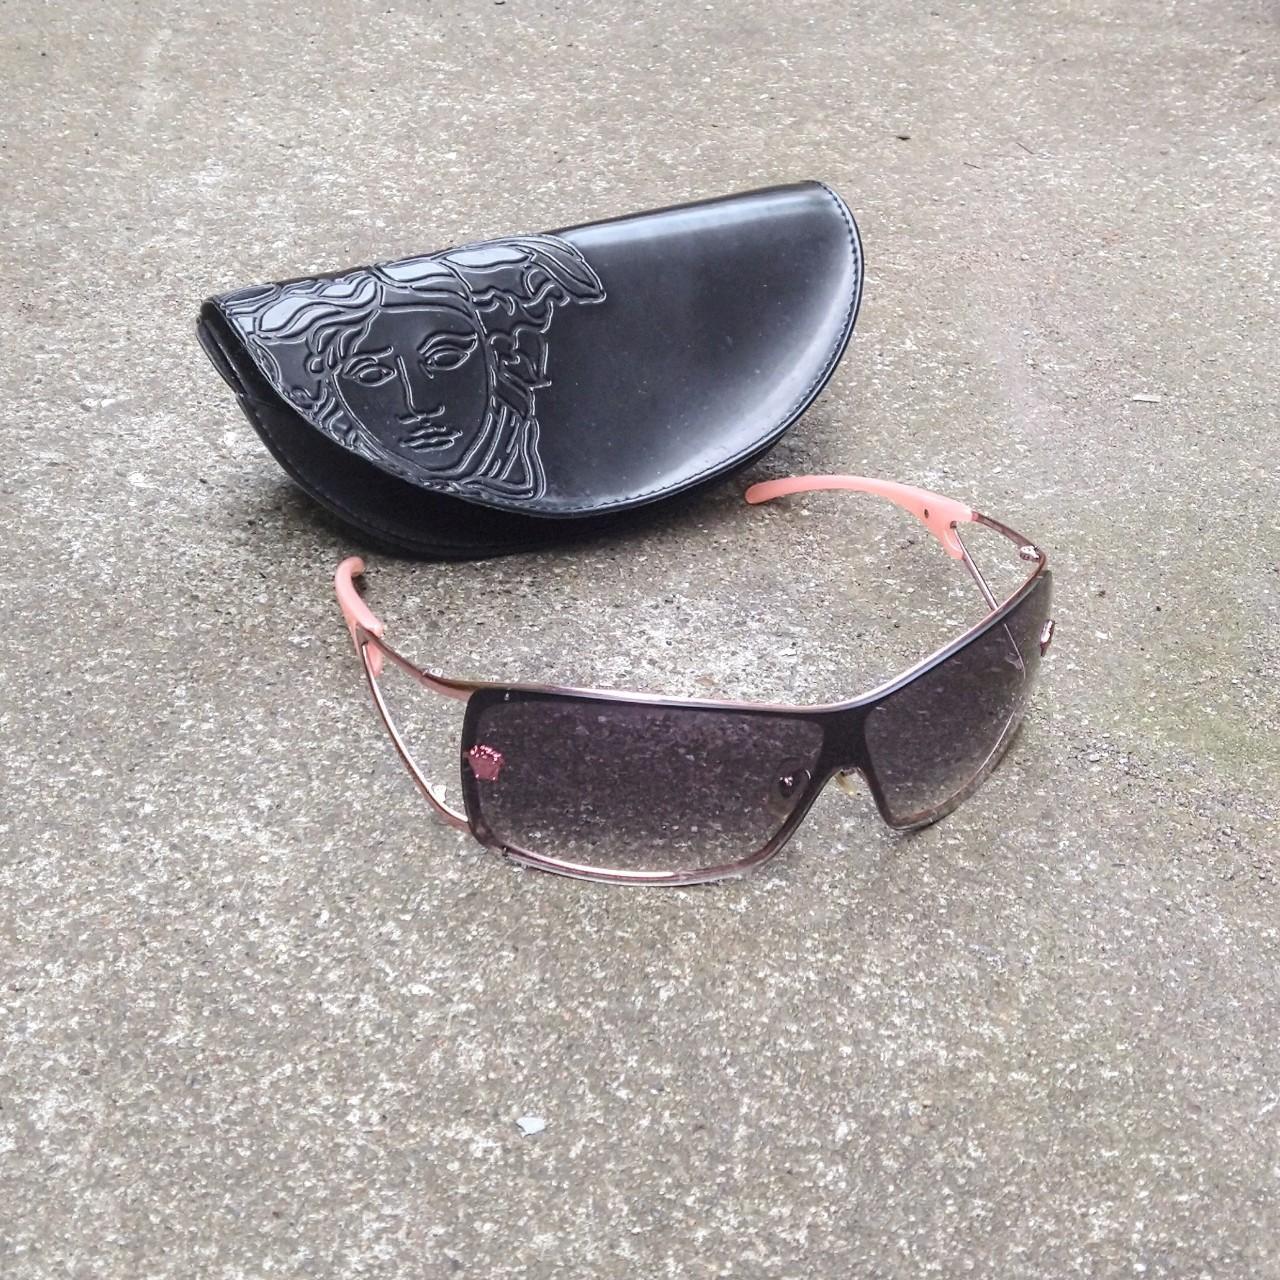 sunglass.la Futuristic Wrap Around Daft Punk Party Novelty Sunglasses